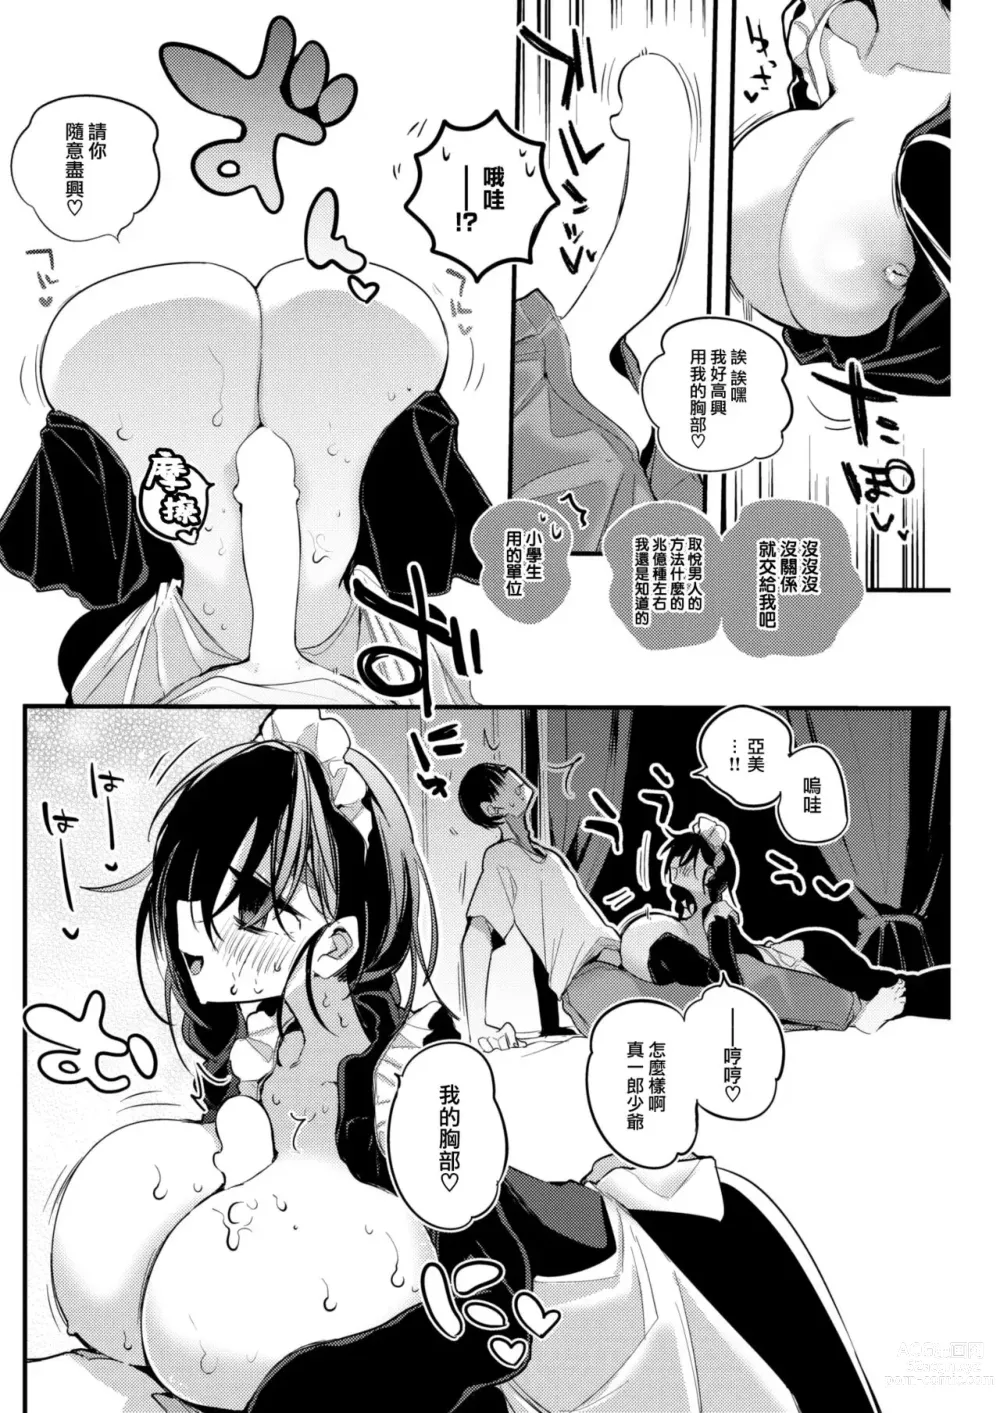 Page 9 of manga Akumade Maid desukara!